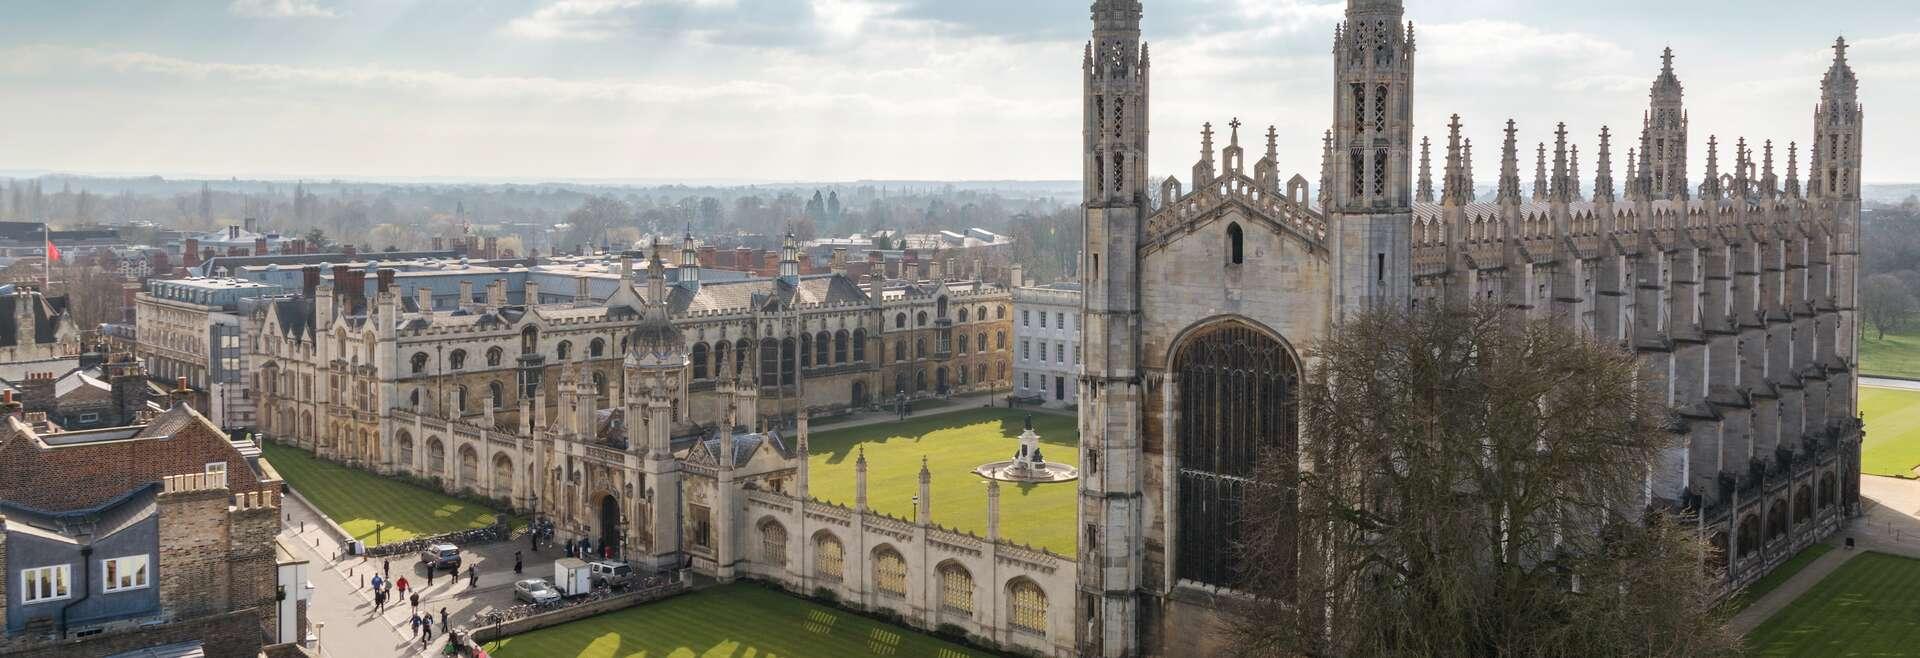 Séjour linguistique Angleterre, Cambridge, University of Cambridge